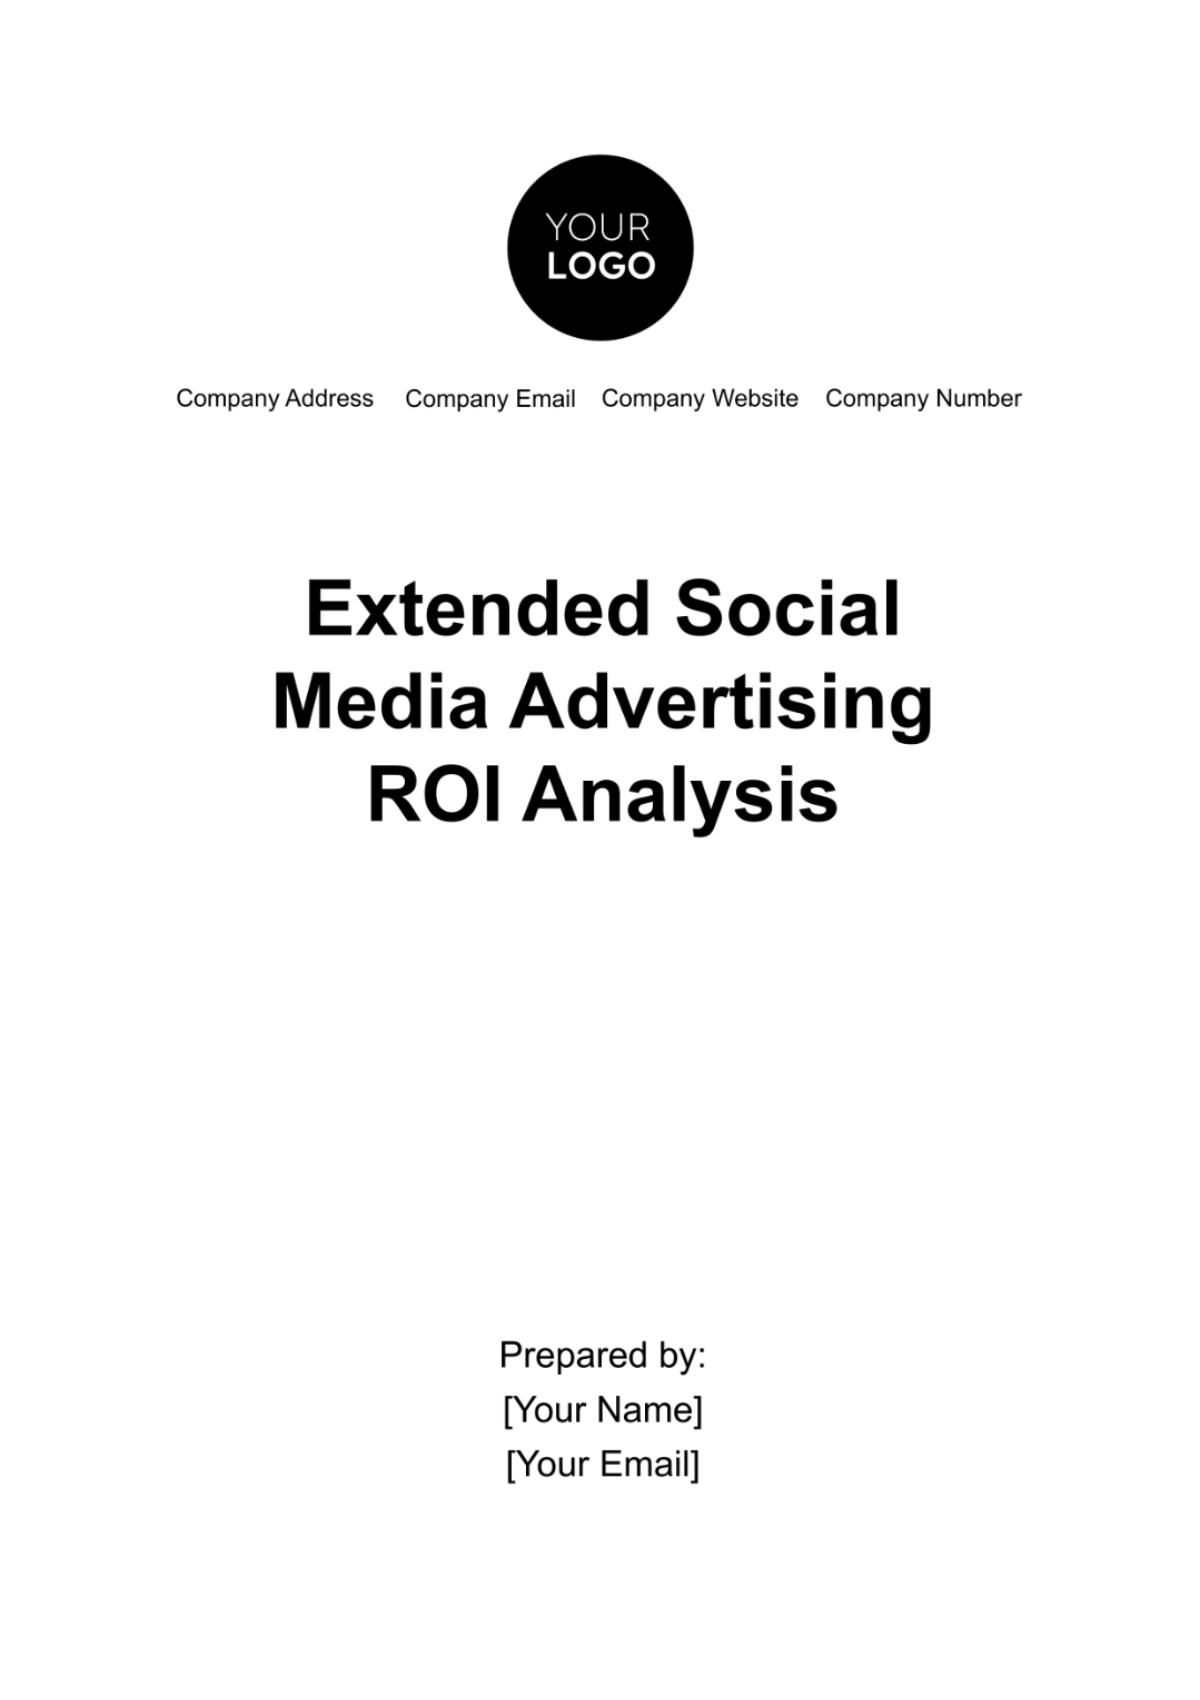 Extended Social Media Advertising ROI Analysis Template